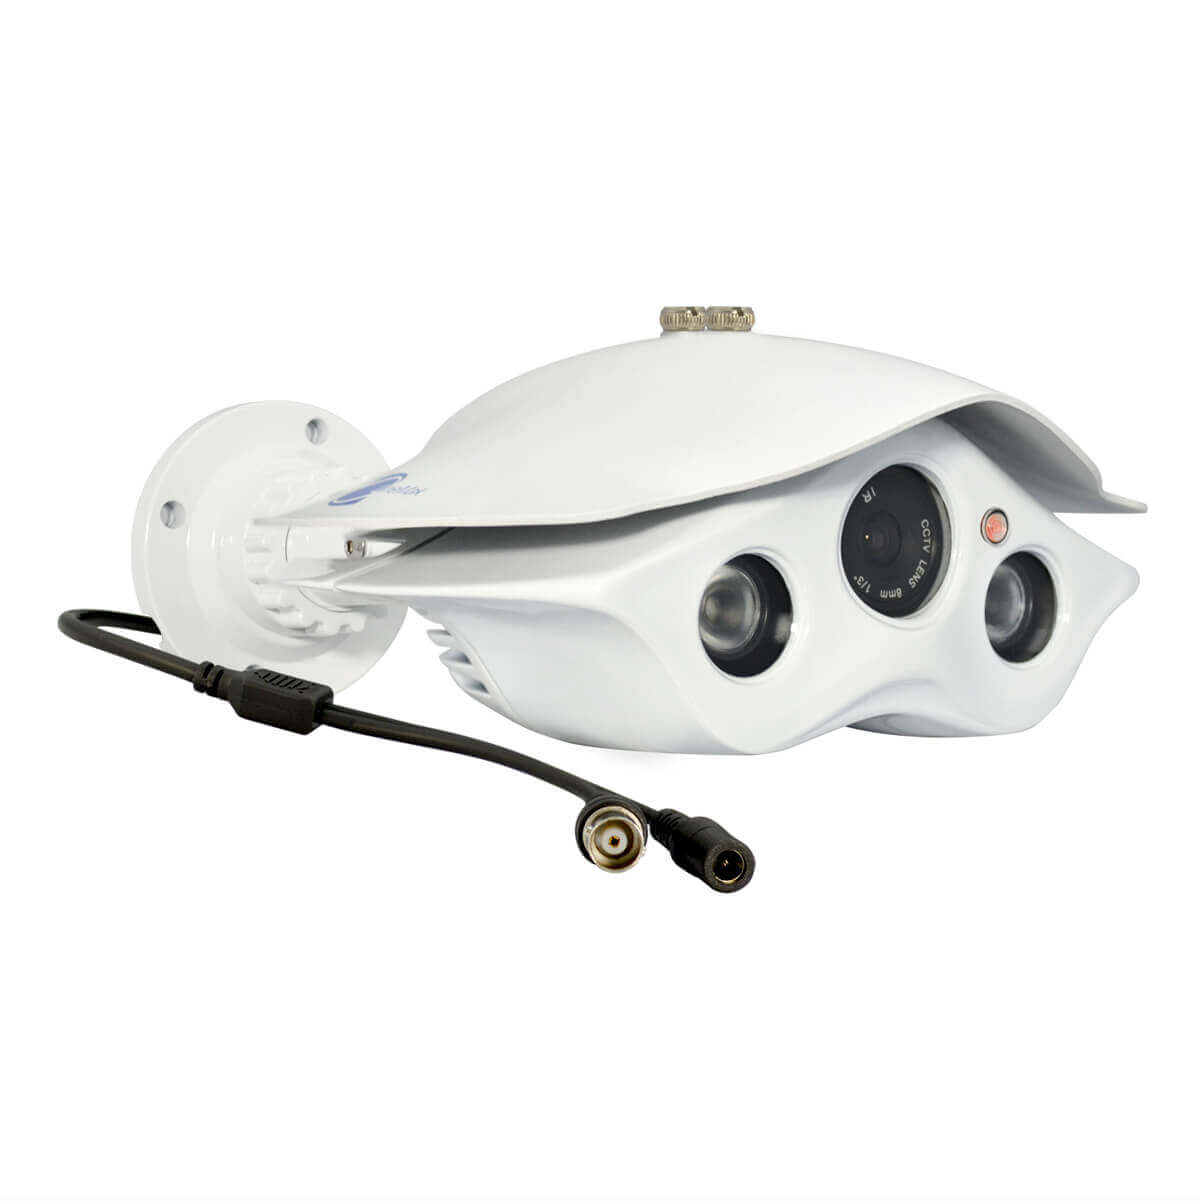 Camara bazuca, Sensor CCD Sony 1/3, 500TVL, 2 LED Array, 60m IR, IP65